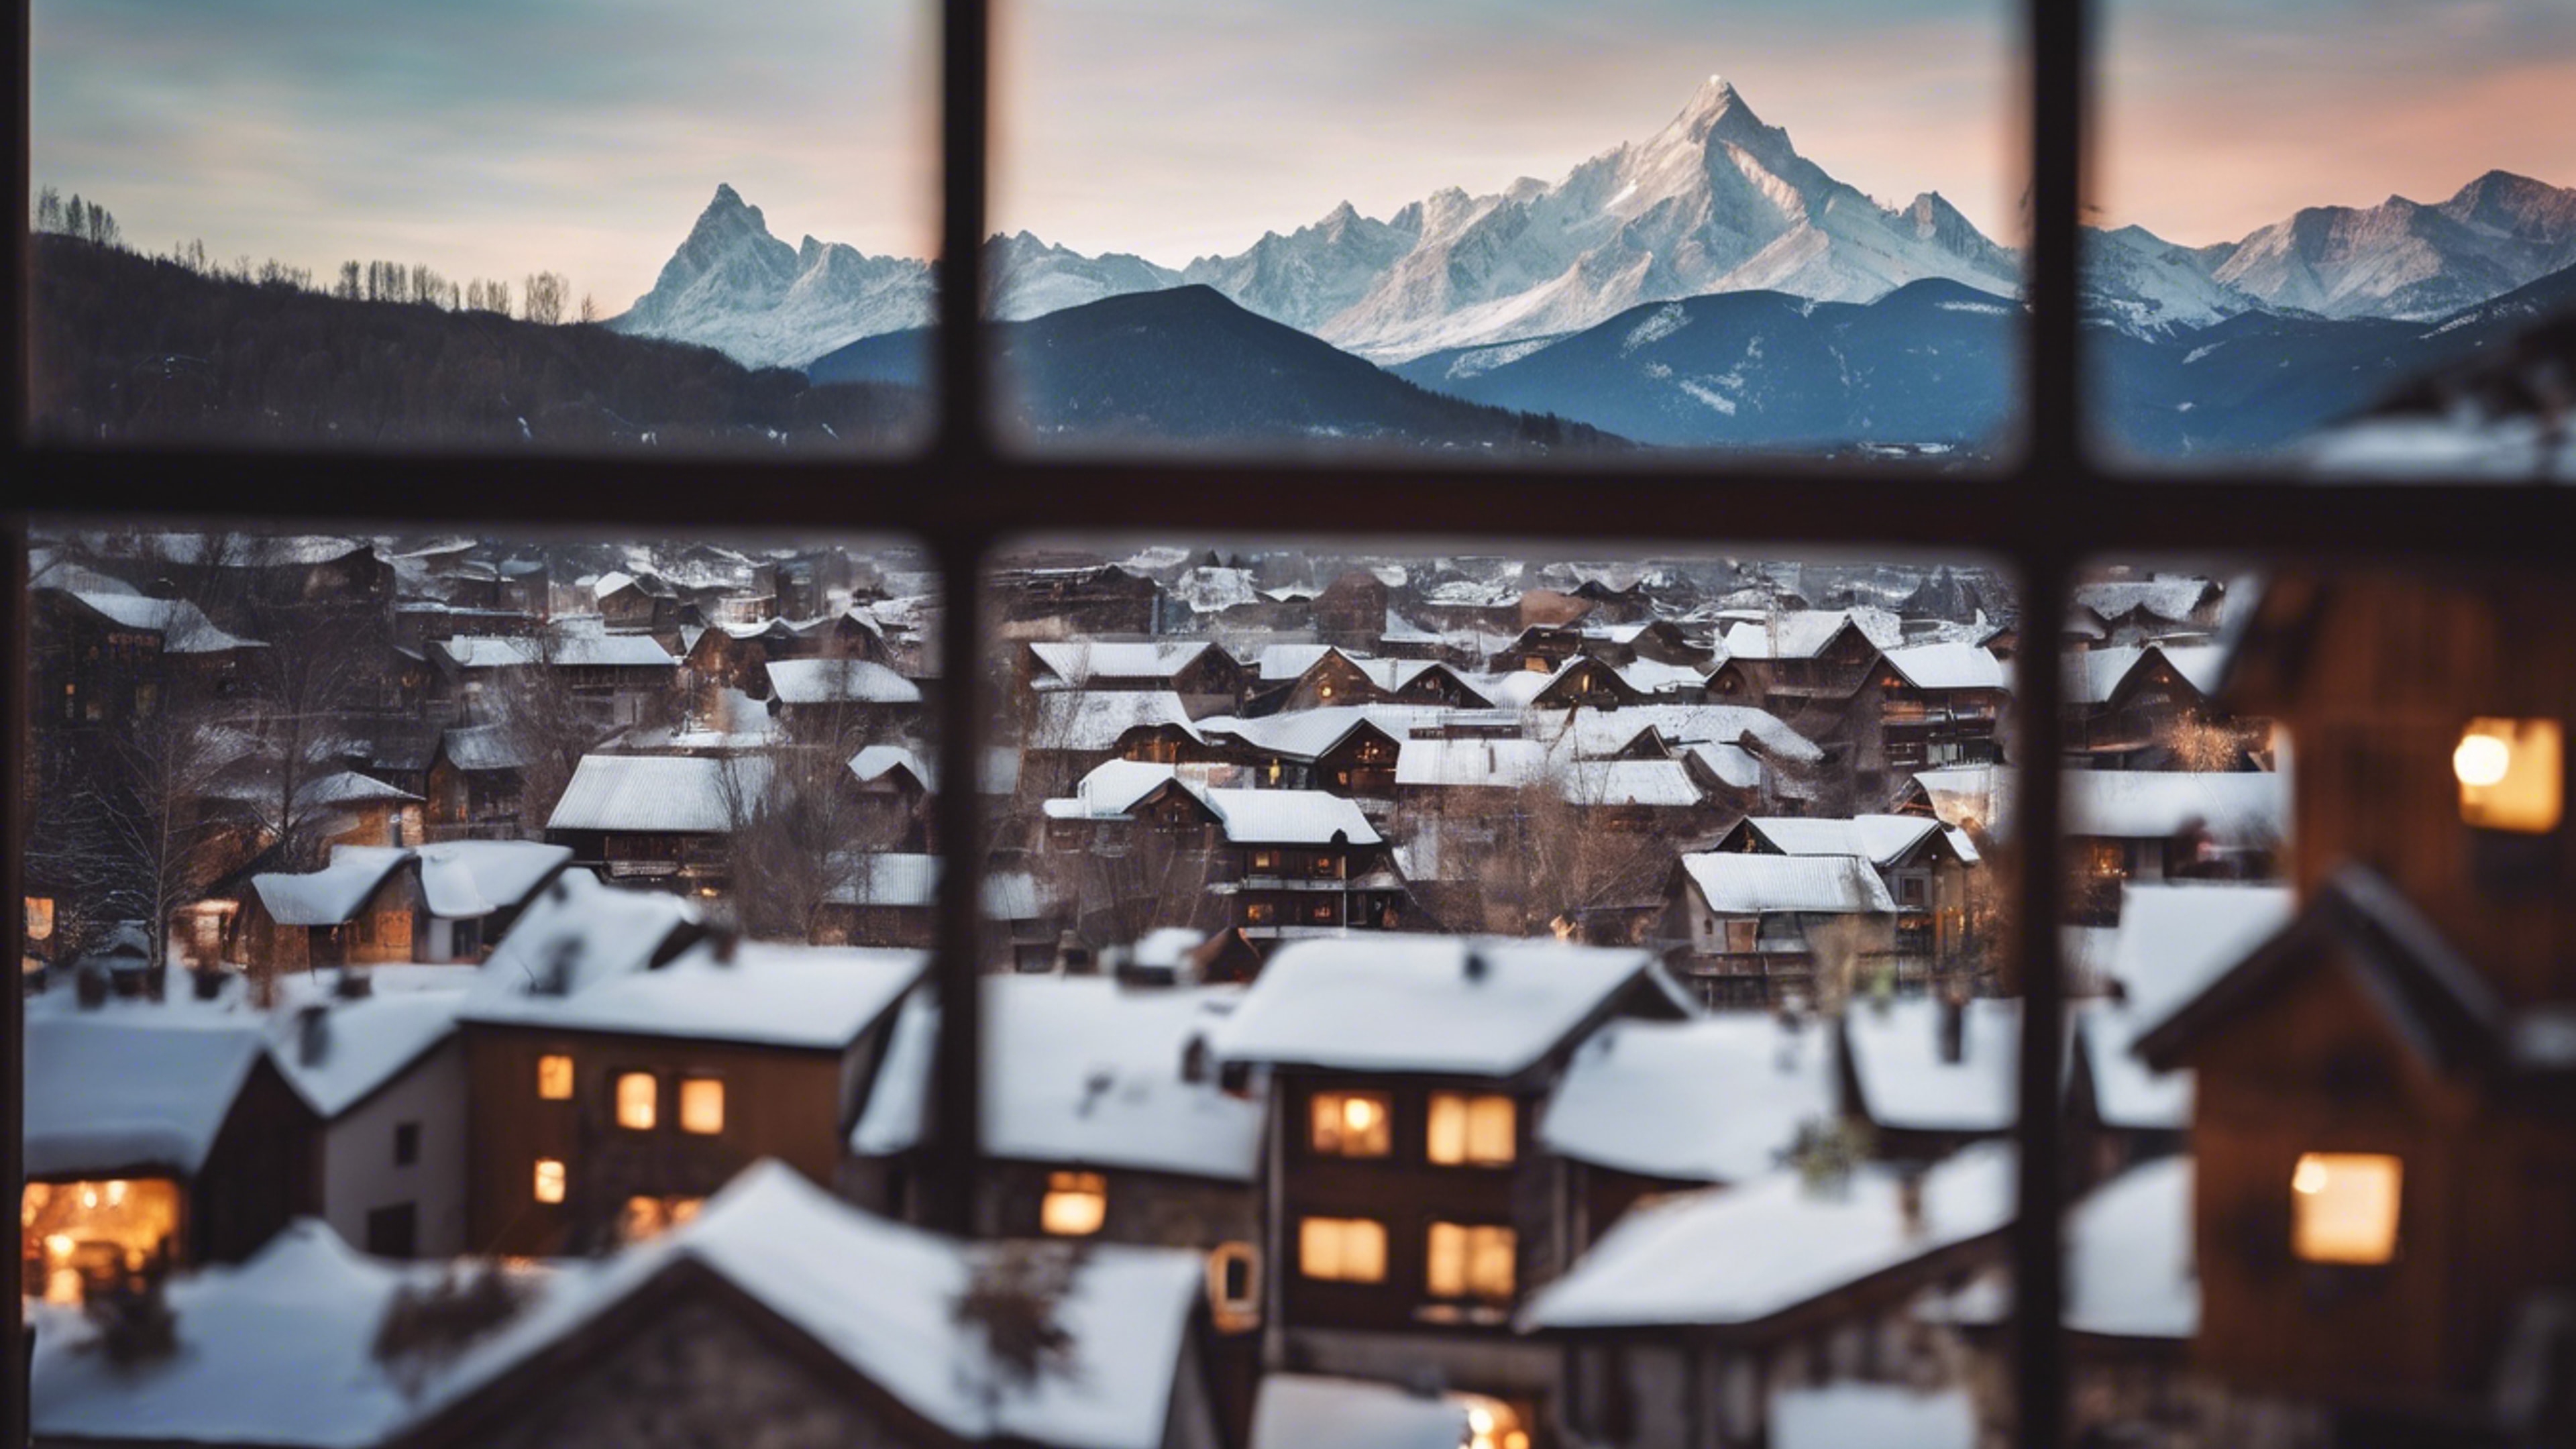 A rustic snowy skyline view of a toy-like mountain village seen through a window.壁紙[0025c80c4a674b29b45c]